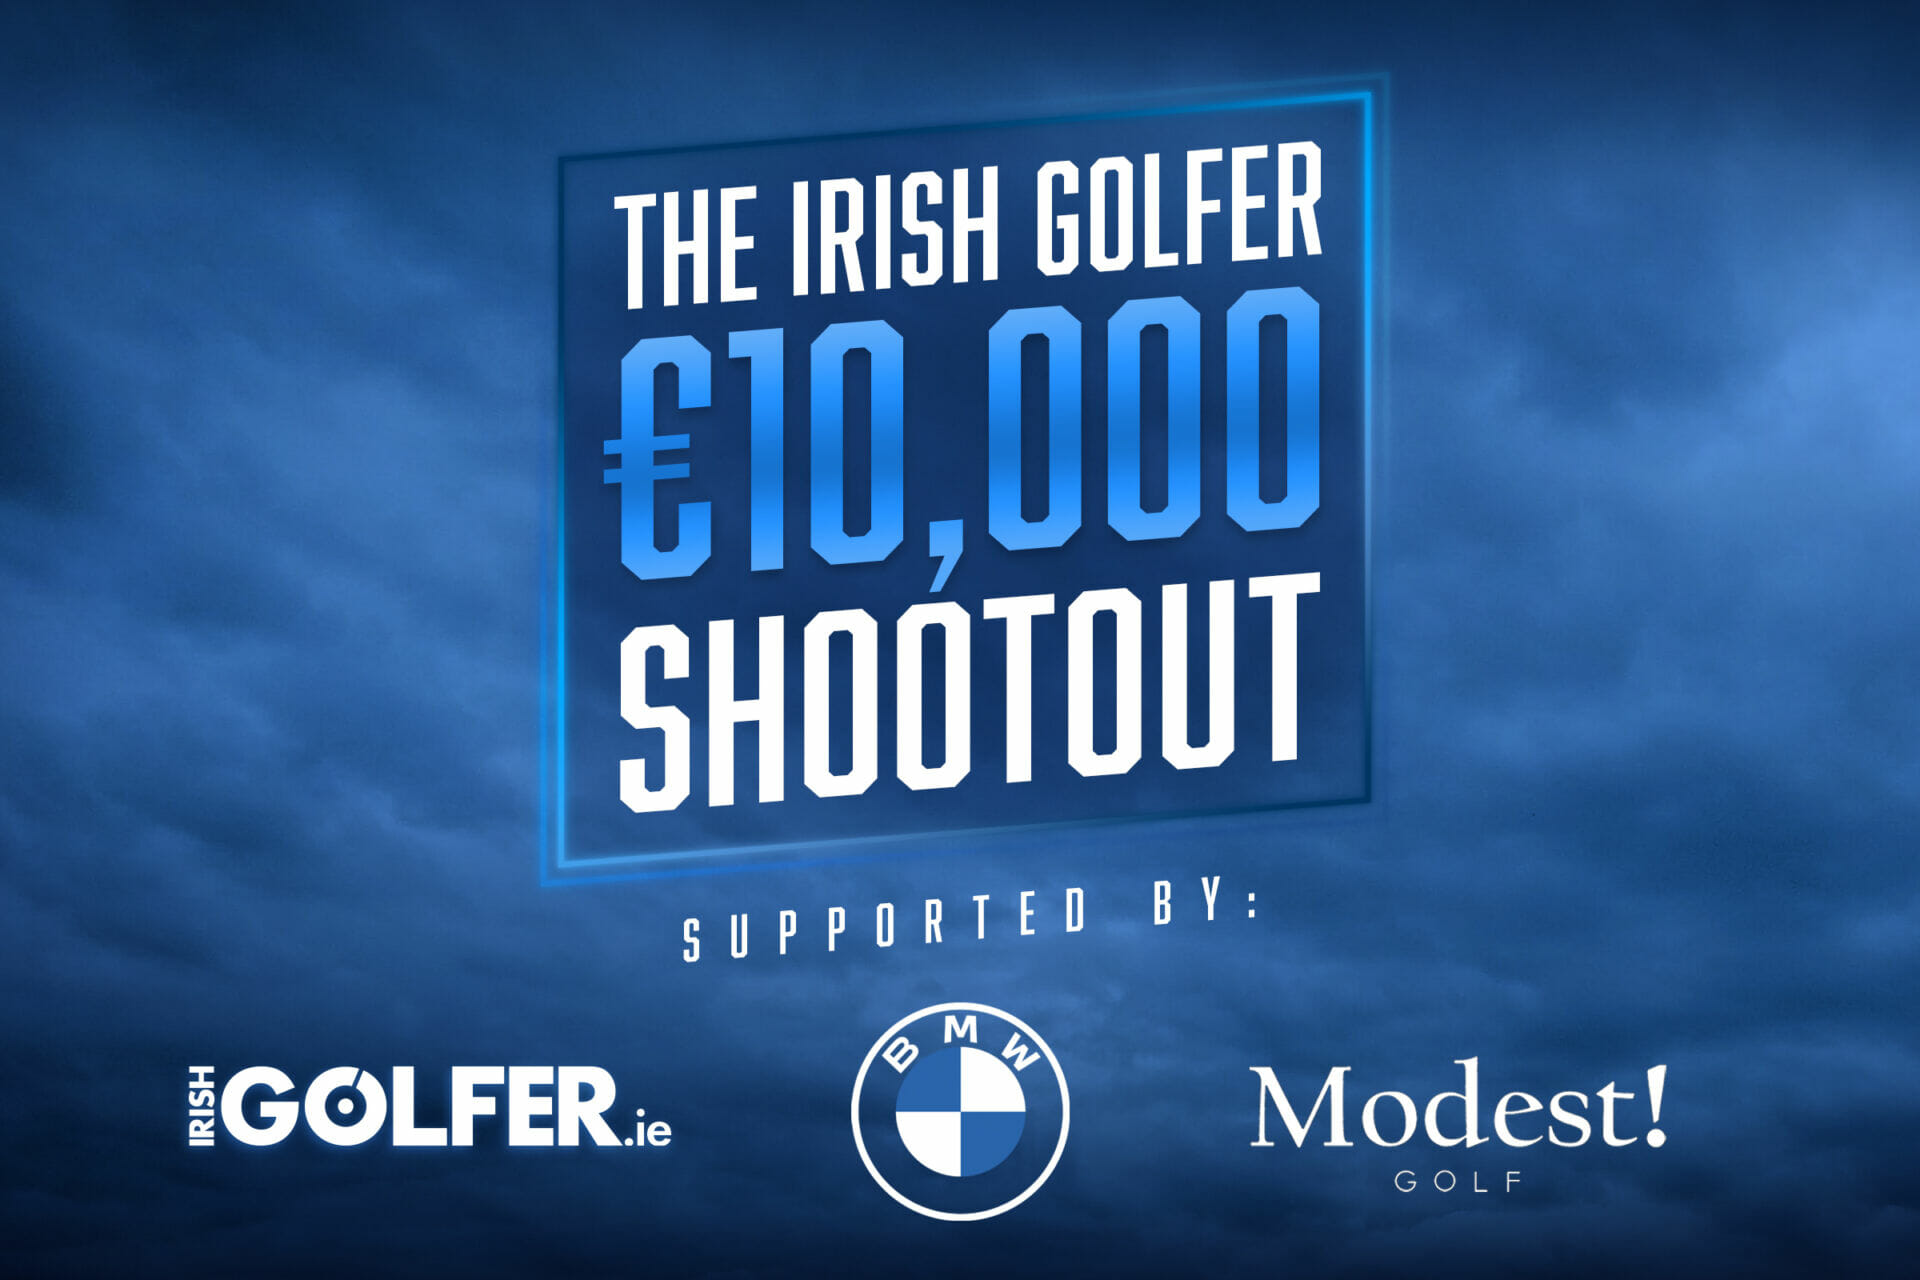 K Club to host €10,000 Irish Golfer Shootout supported by BMW & Modest! Golf